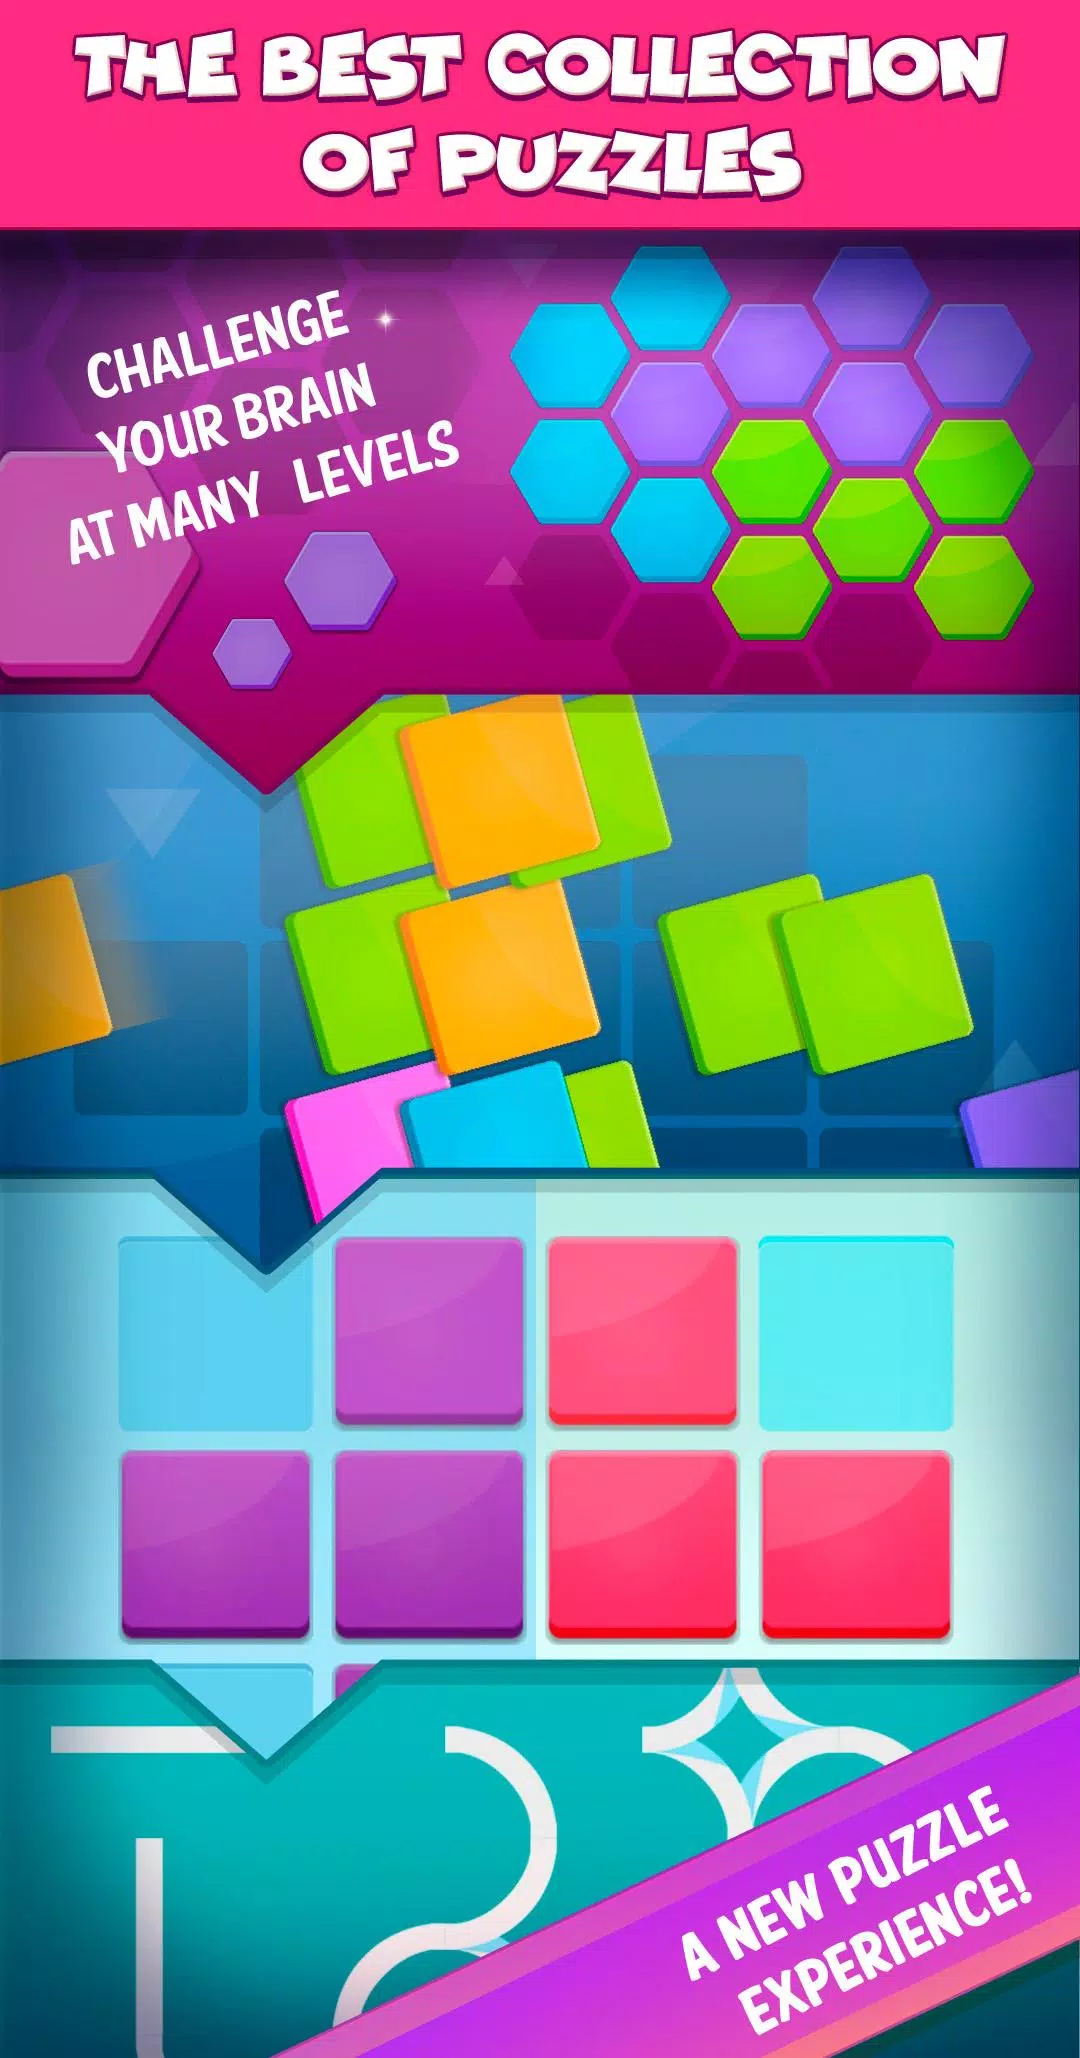 Find The Sets - Brain Game Apk Download for Android- Latest version 1.5-  nl.borkoek.set